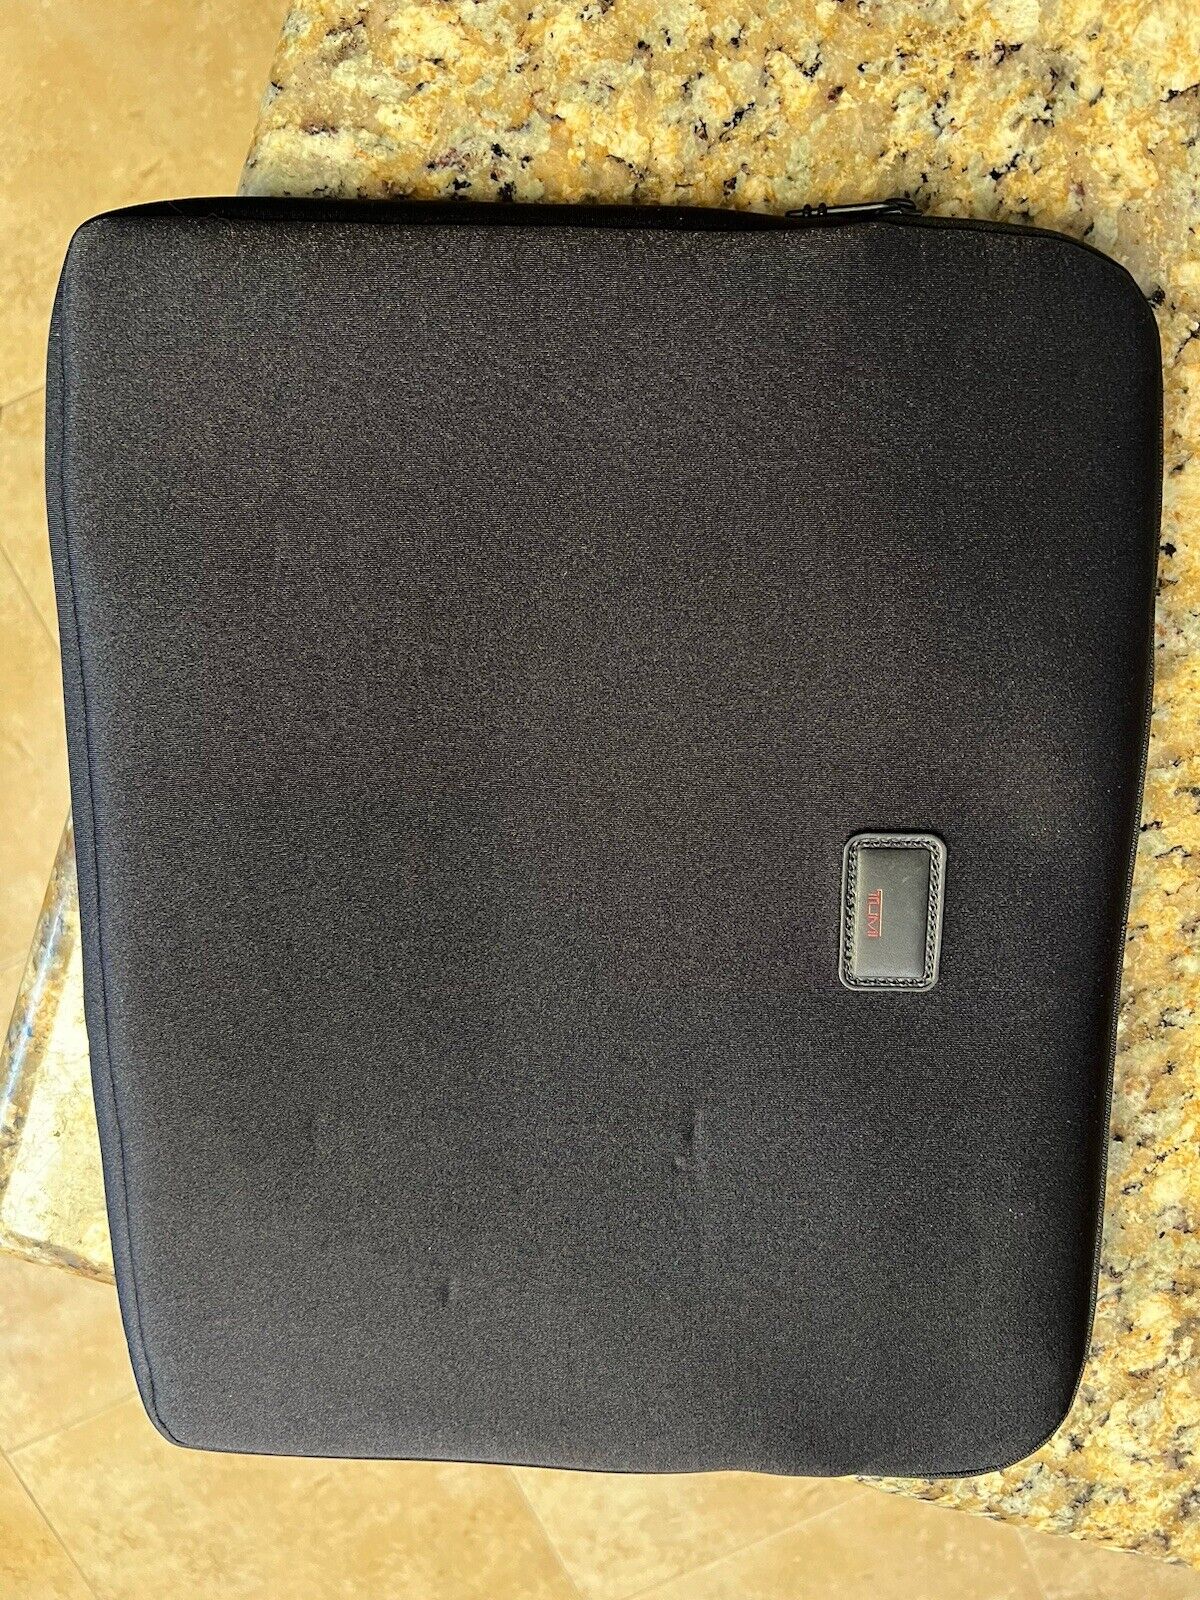 TUMI Neoprene Laptop/iPad Sleeve Cover Zipper Closure Black Soft Case Bag 16” W